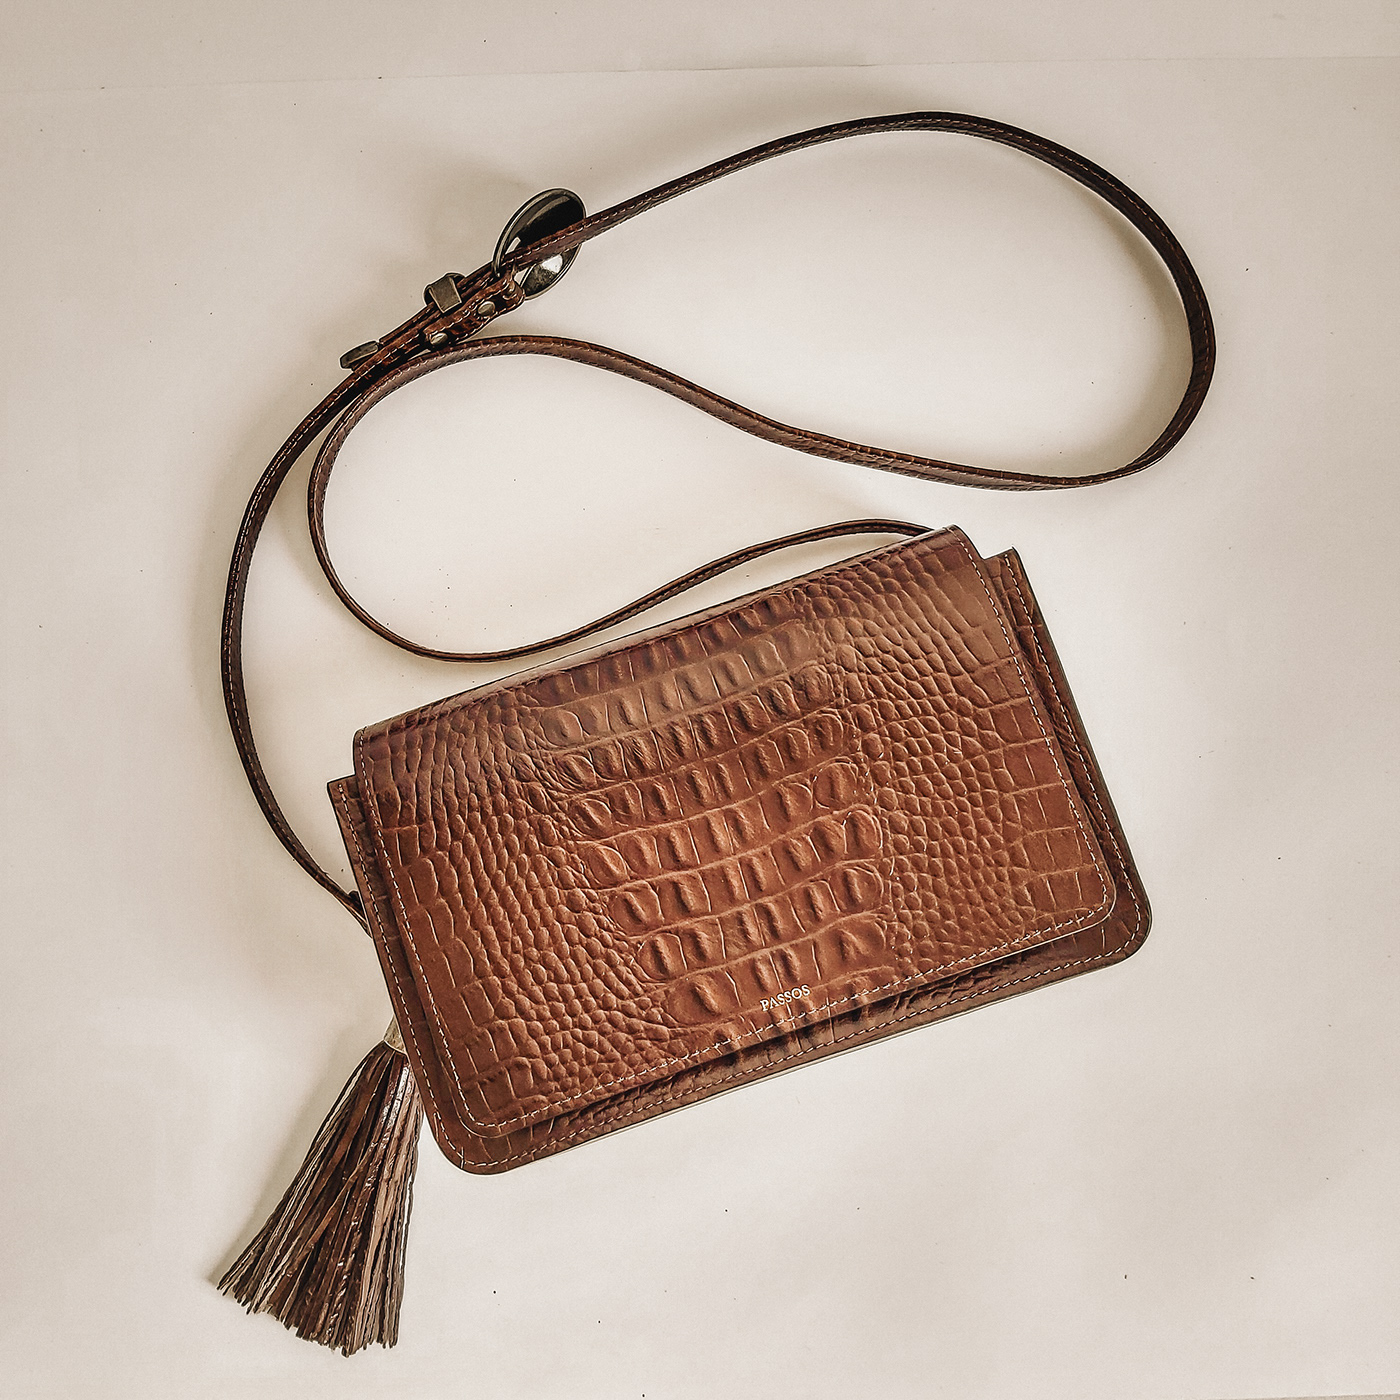 CrossbodyBAG handbag handmade leather leatherbag leatherpurse shoulderbag